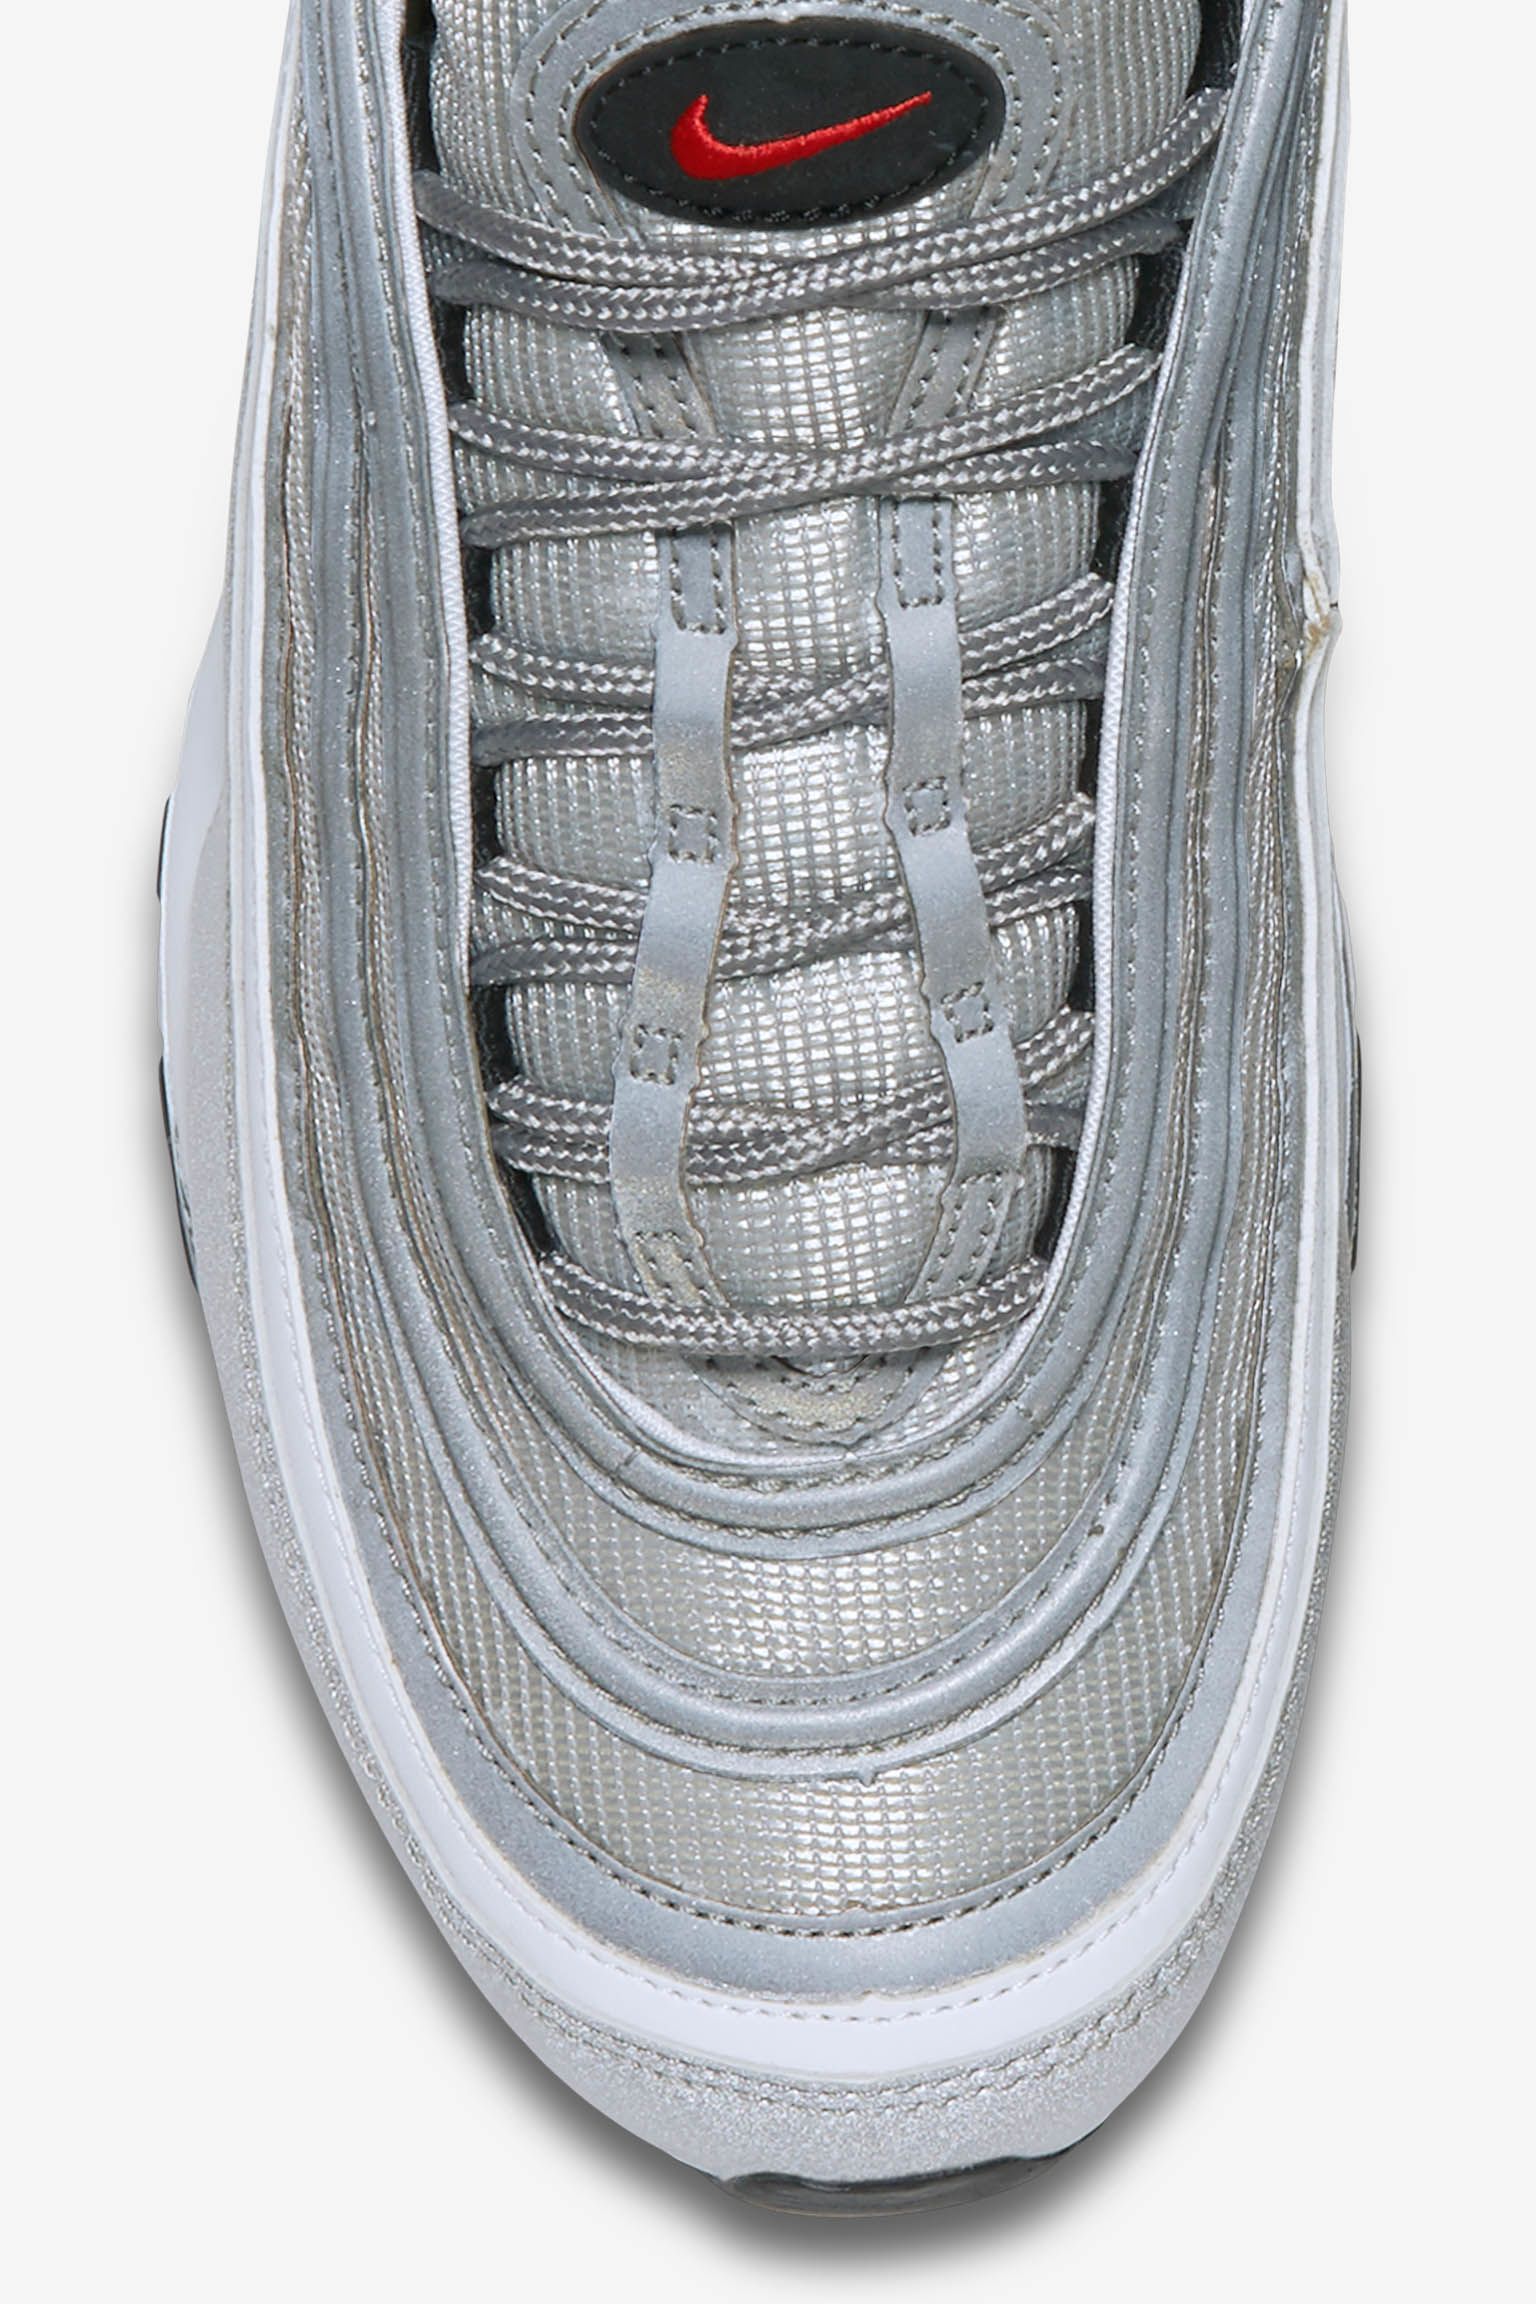 Nike Air Max 97 OG 'Metallic Silver'. Nike SNKRS خبز طاوه